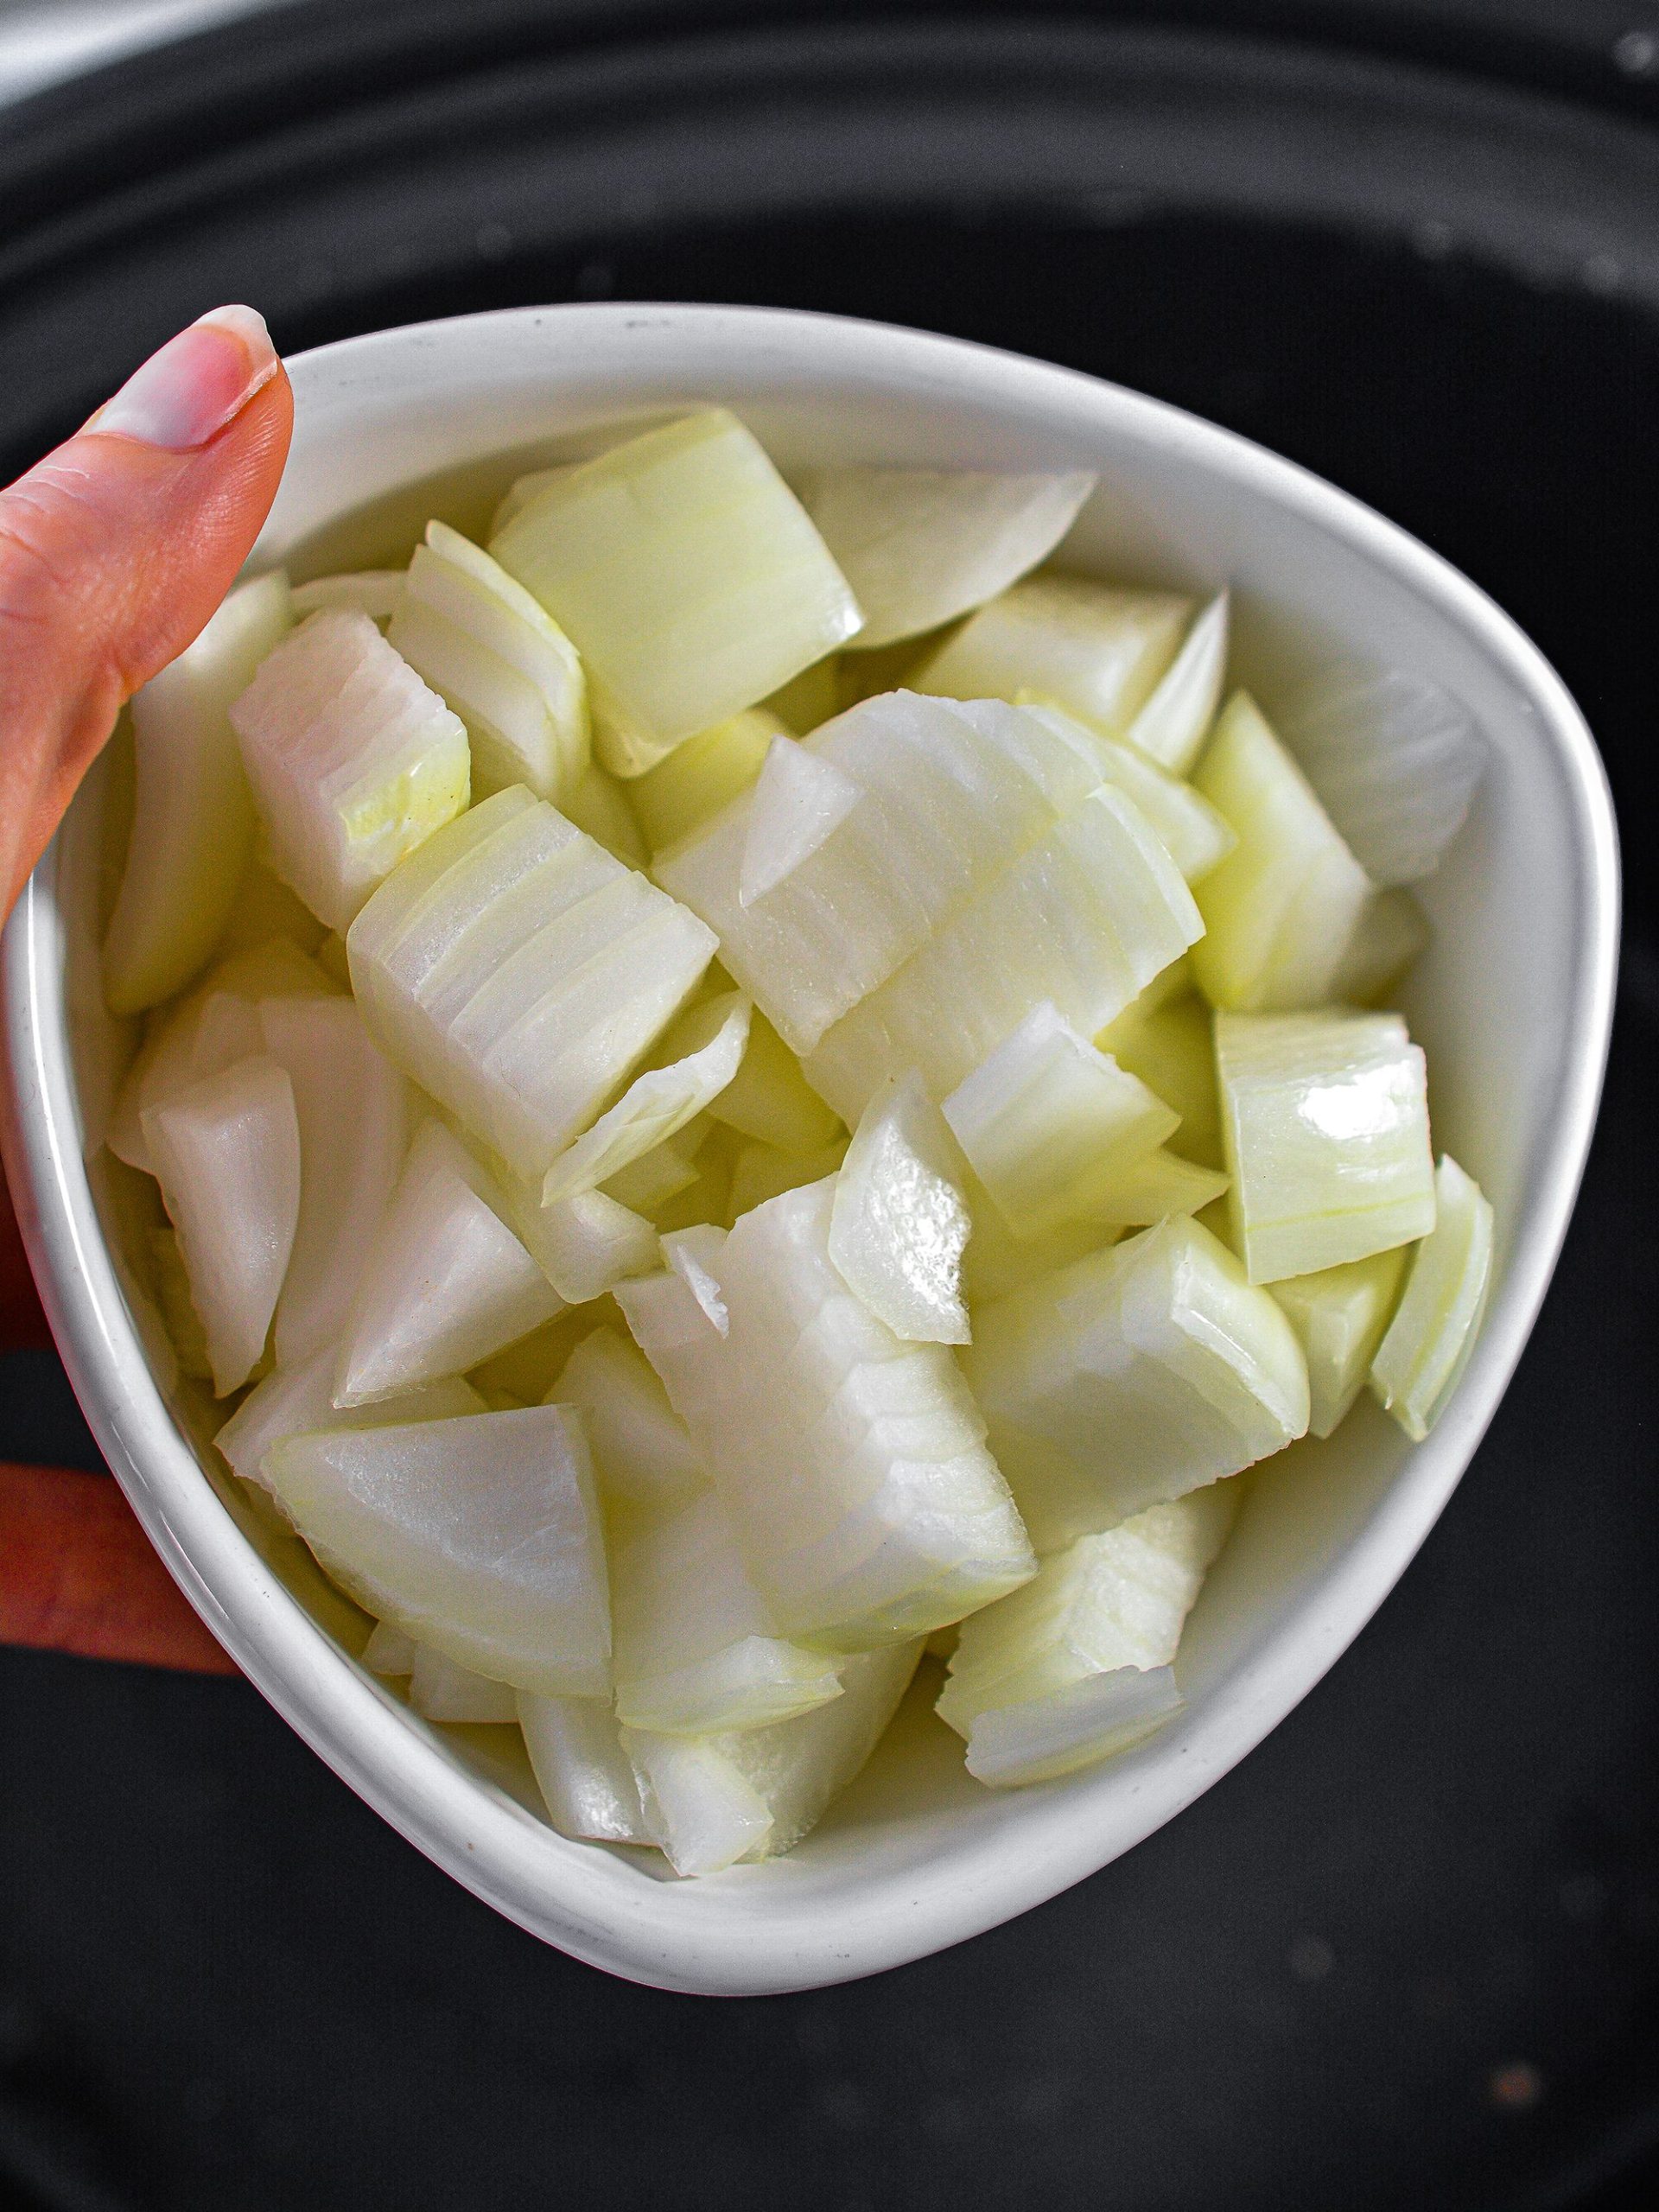 Adding onions